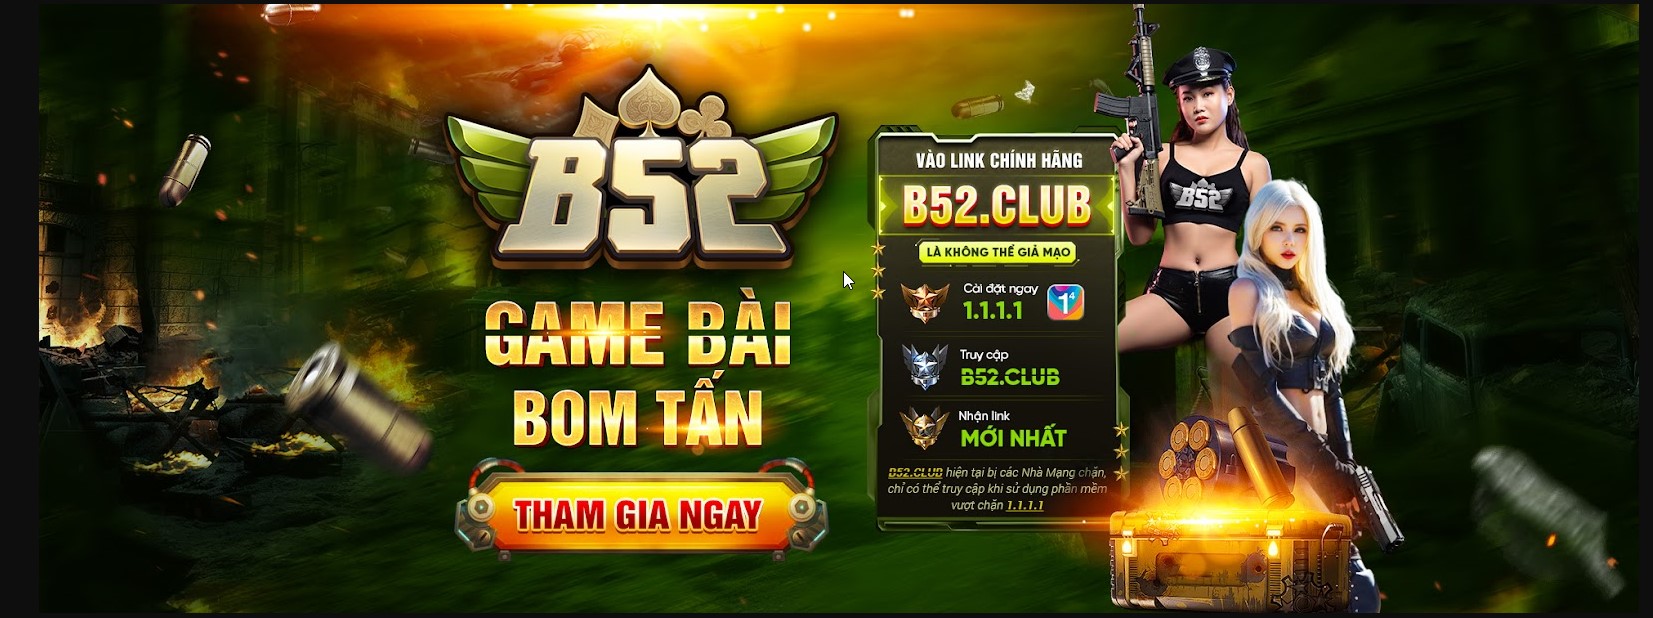 cong game b52 club